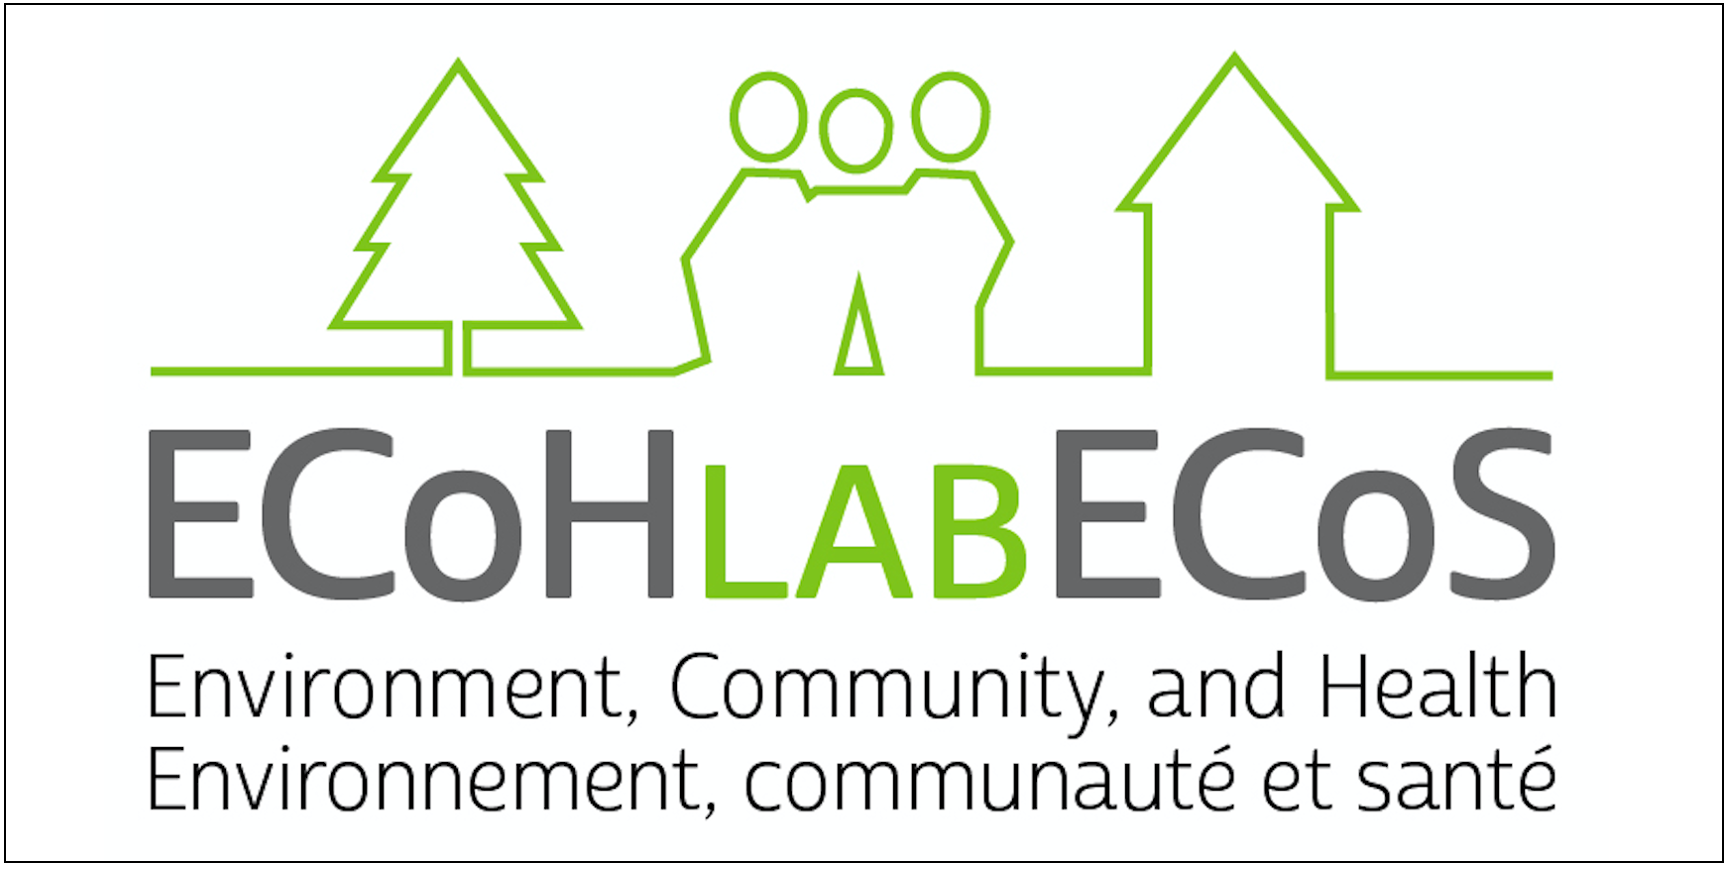 Environment, Community and Health Laboratory